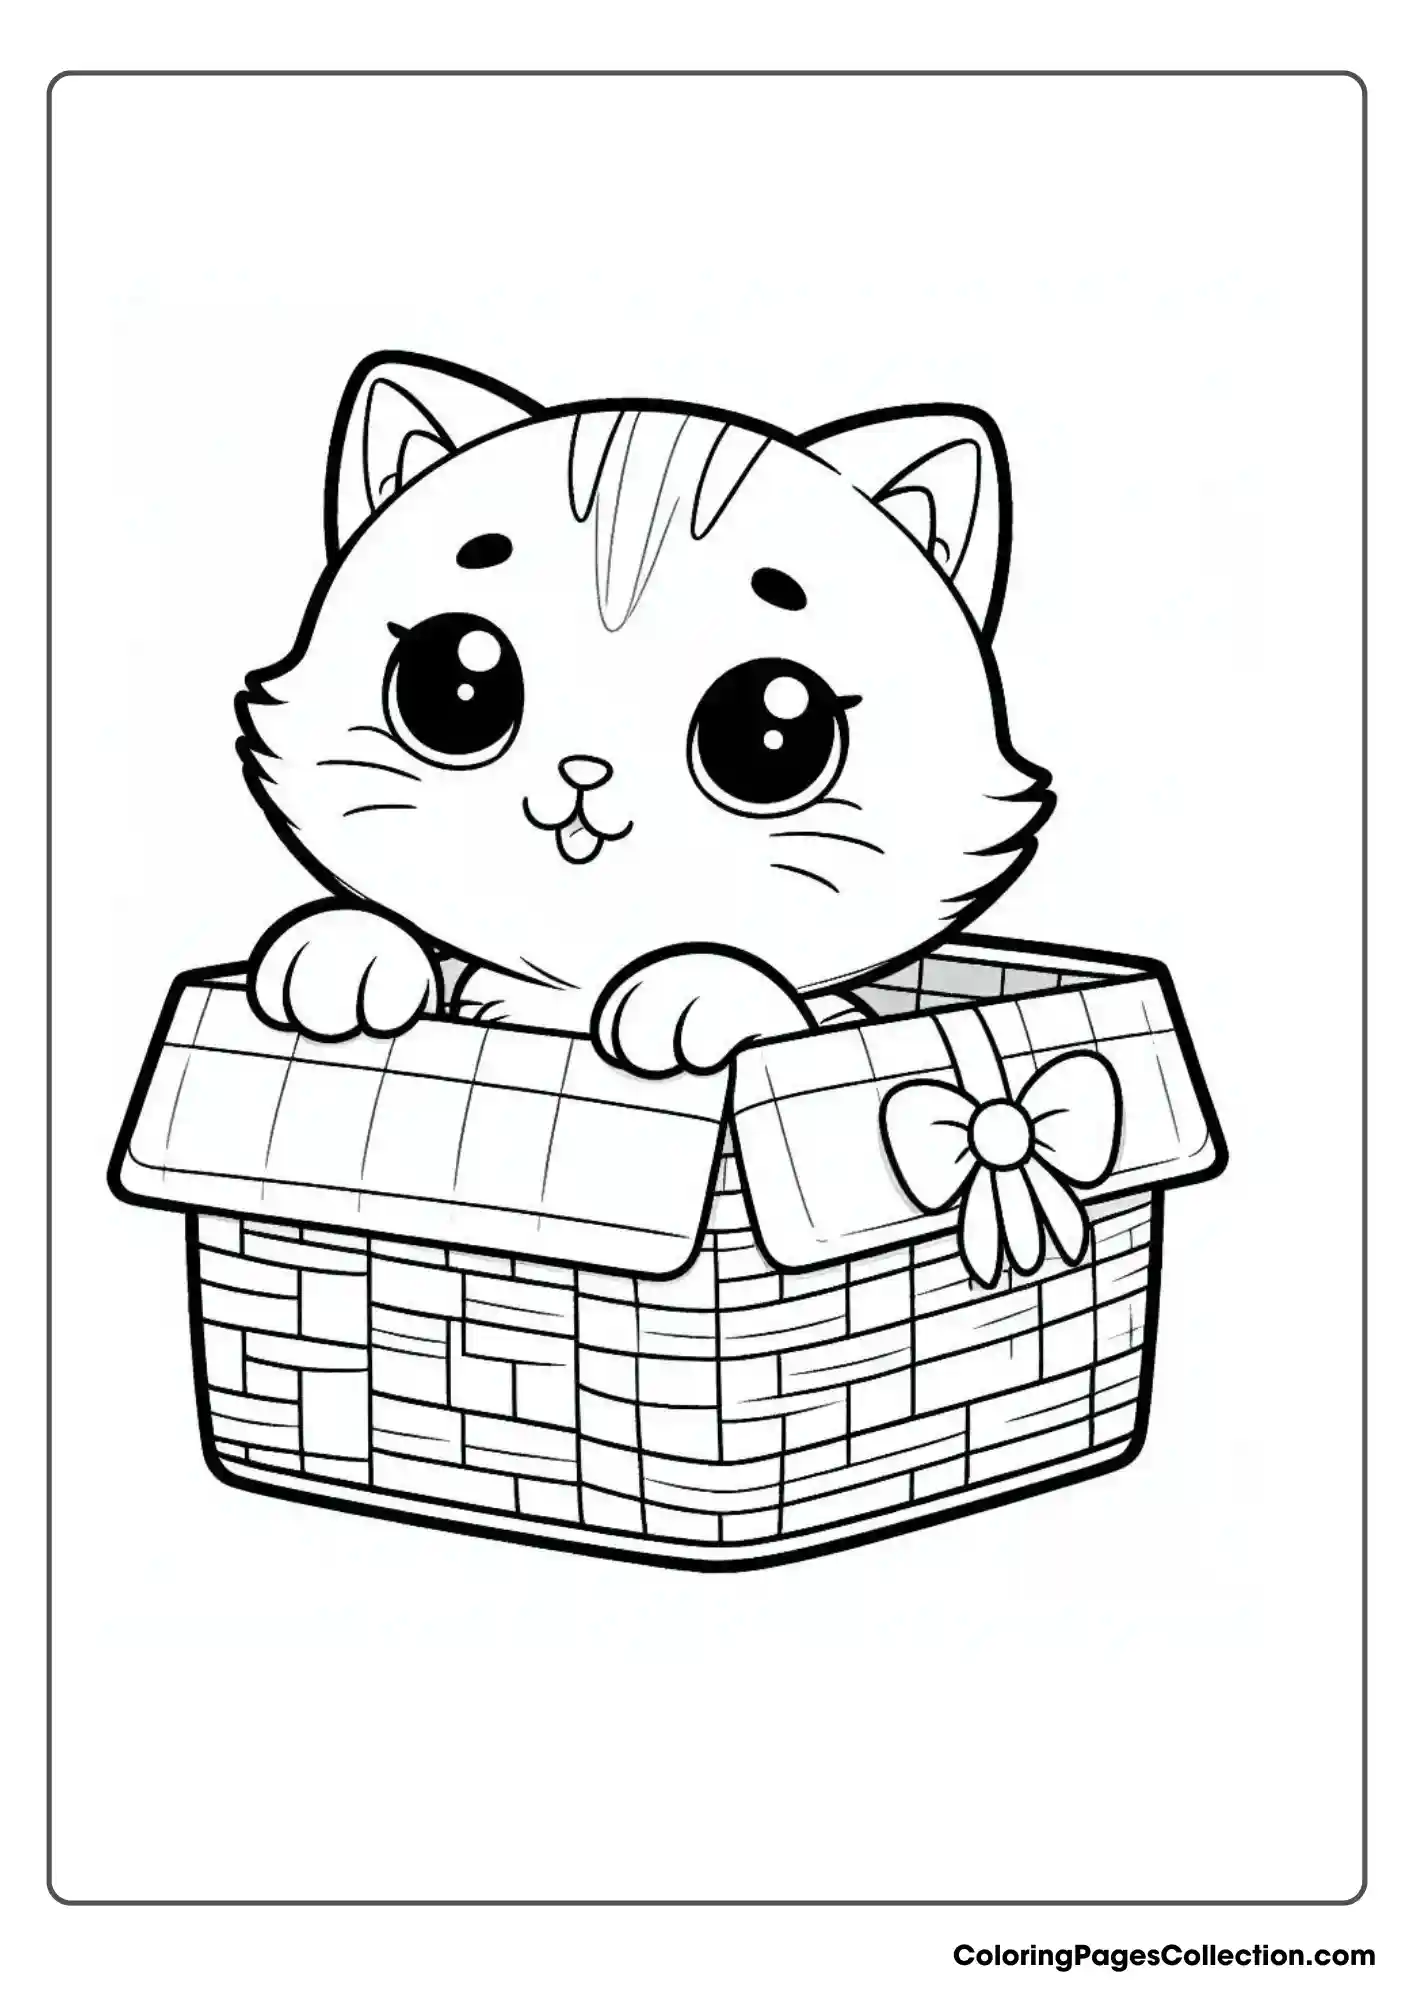 A Cute Cat Is Peeking Out Of A Basket